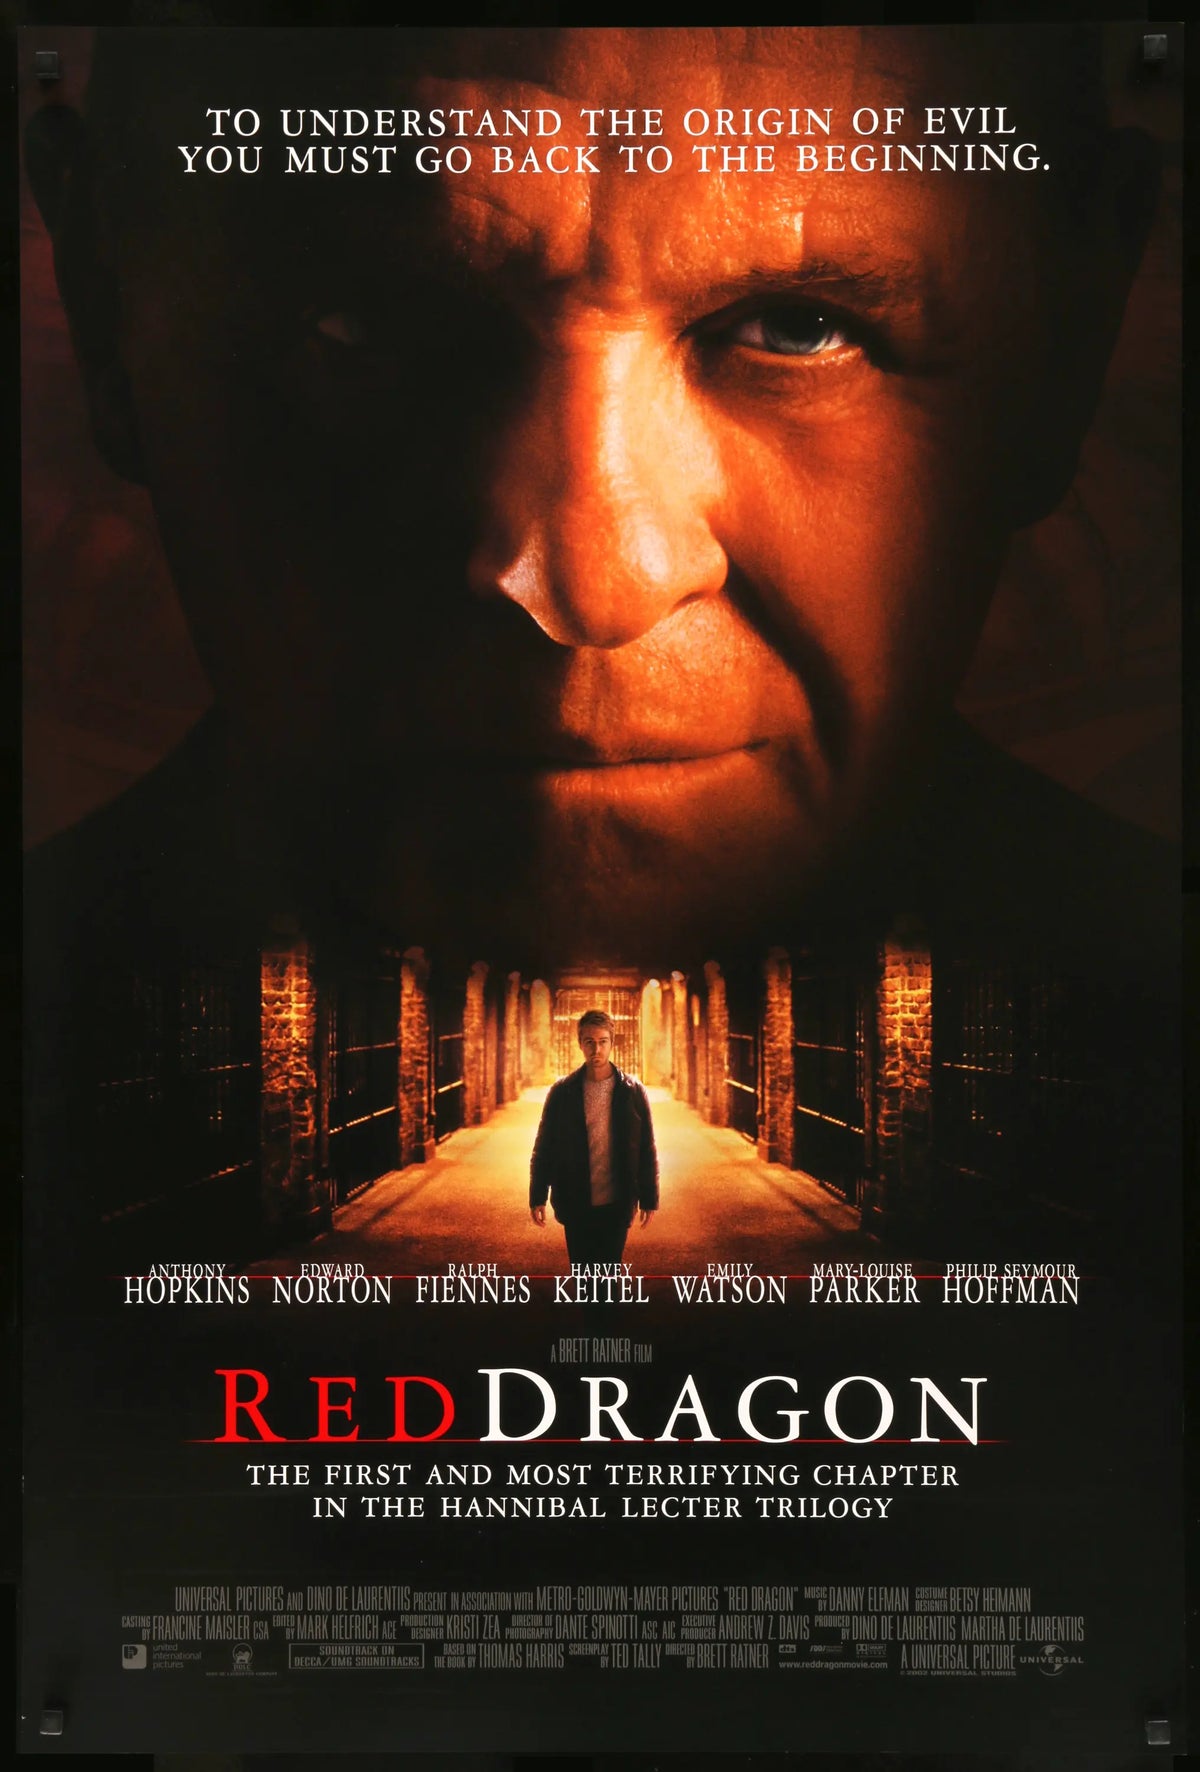 Red Dragon (2002) original movie poster for sale at Original Film Art